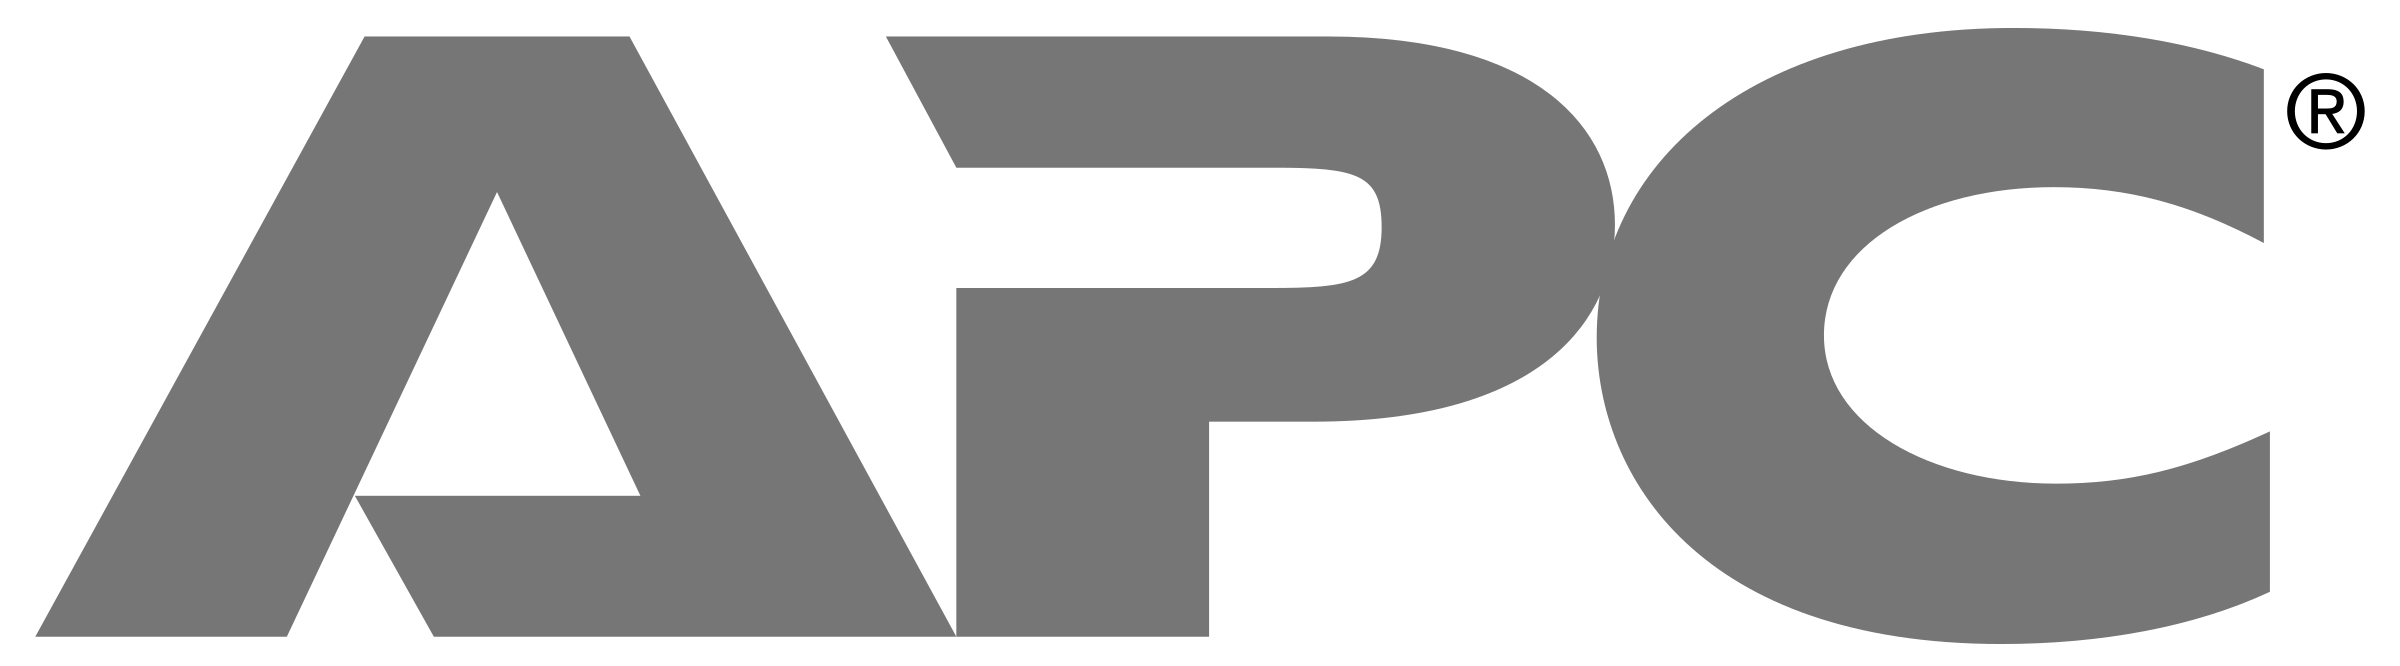 apc-01-logo-png-gary